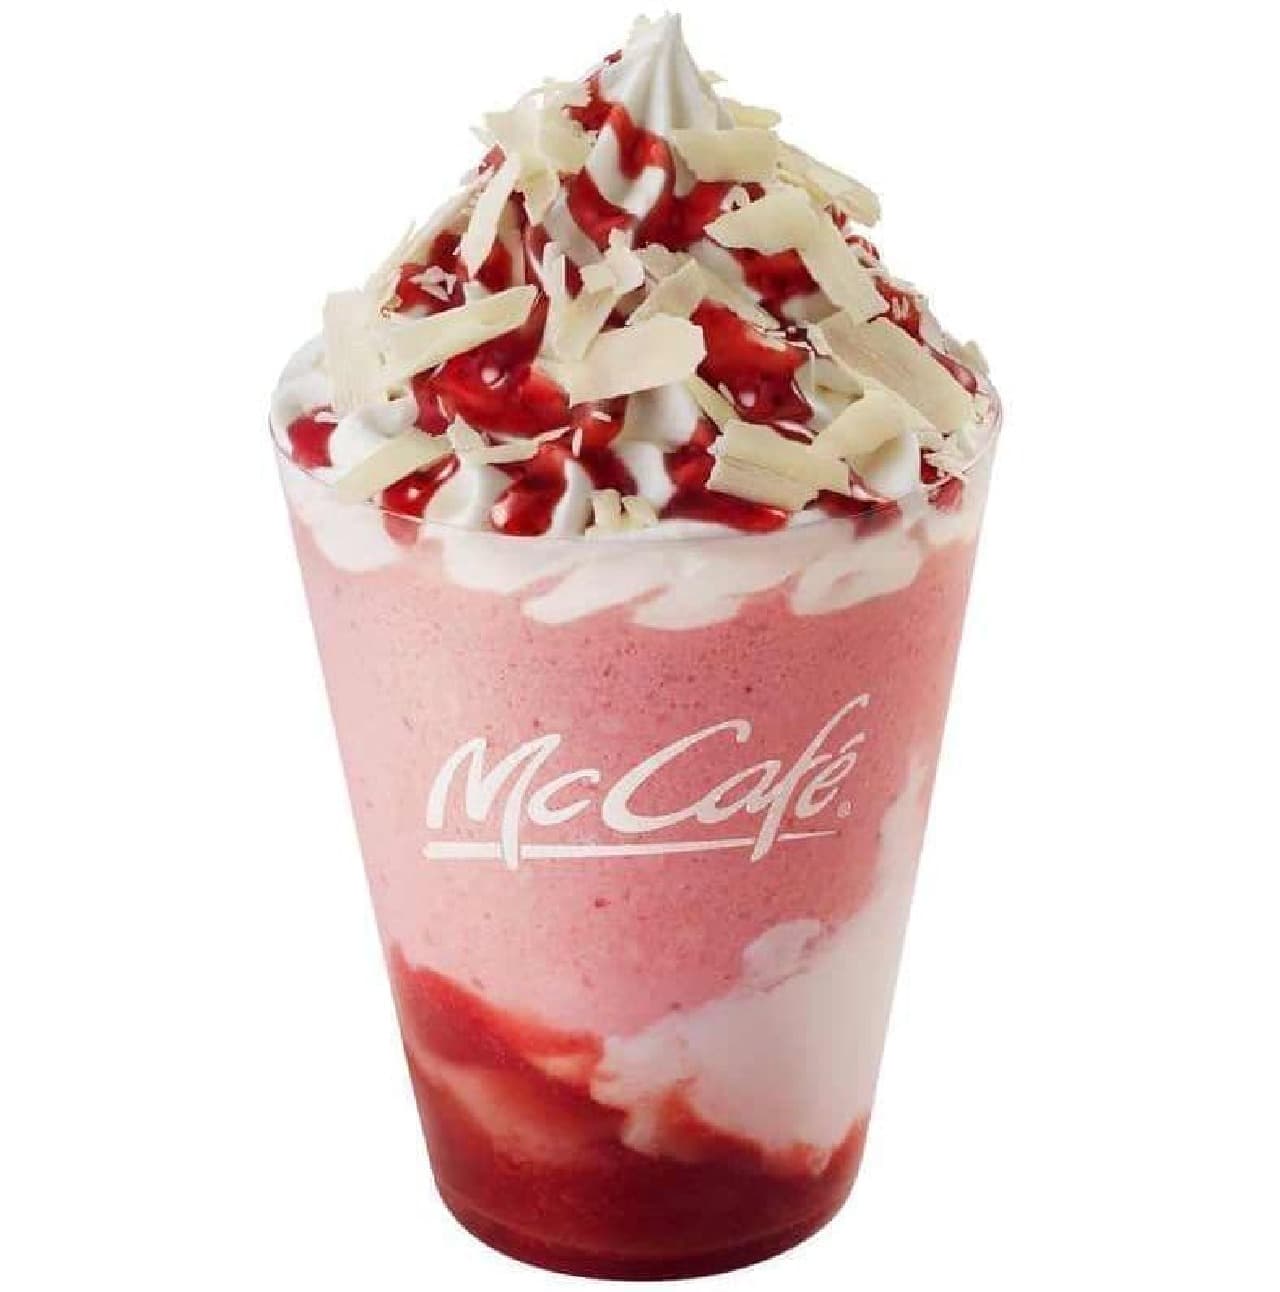 McDonald's "White Chocolate Strawberry Frappe"